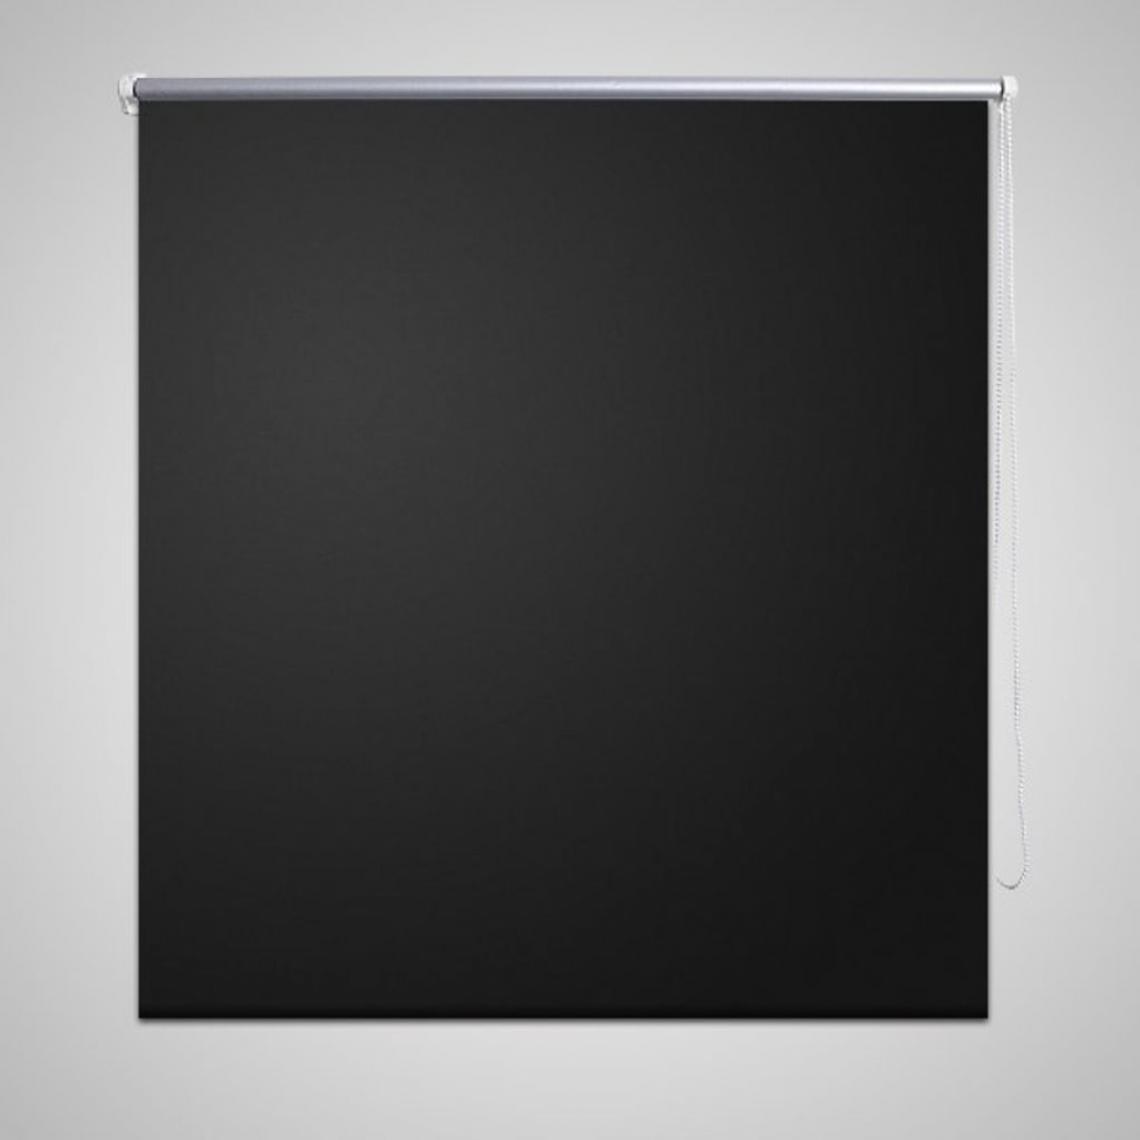 Chunhelife - Store enrouleur occultant 160 x 175 cm noir - Store banne